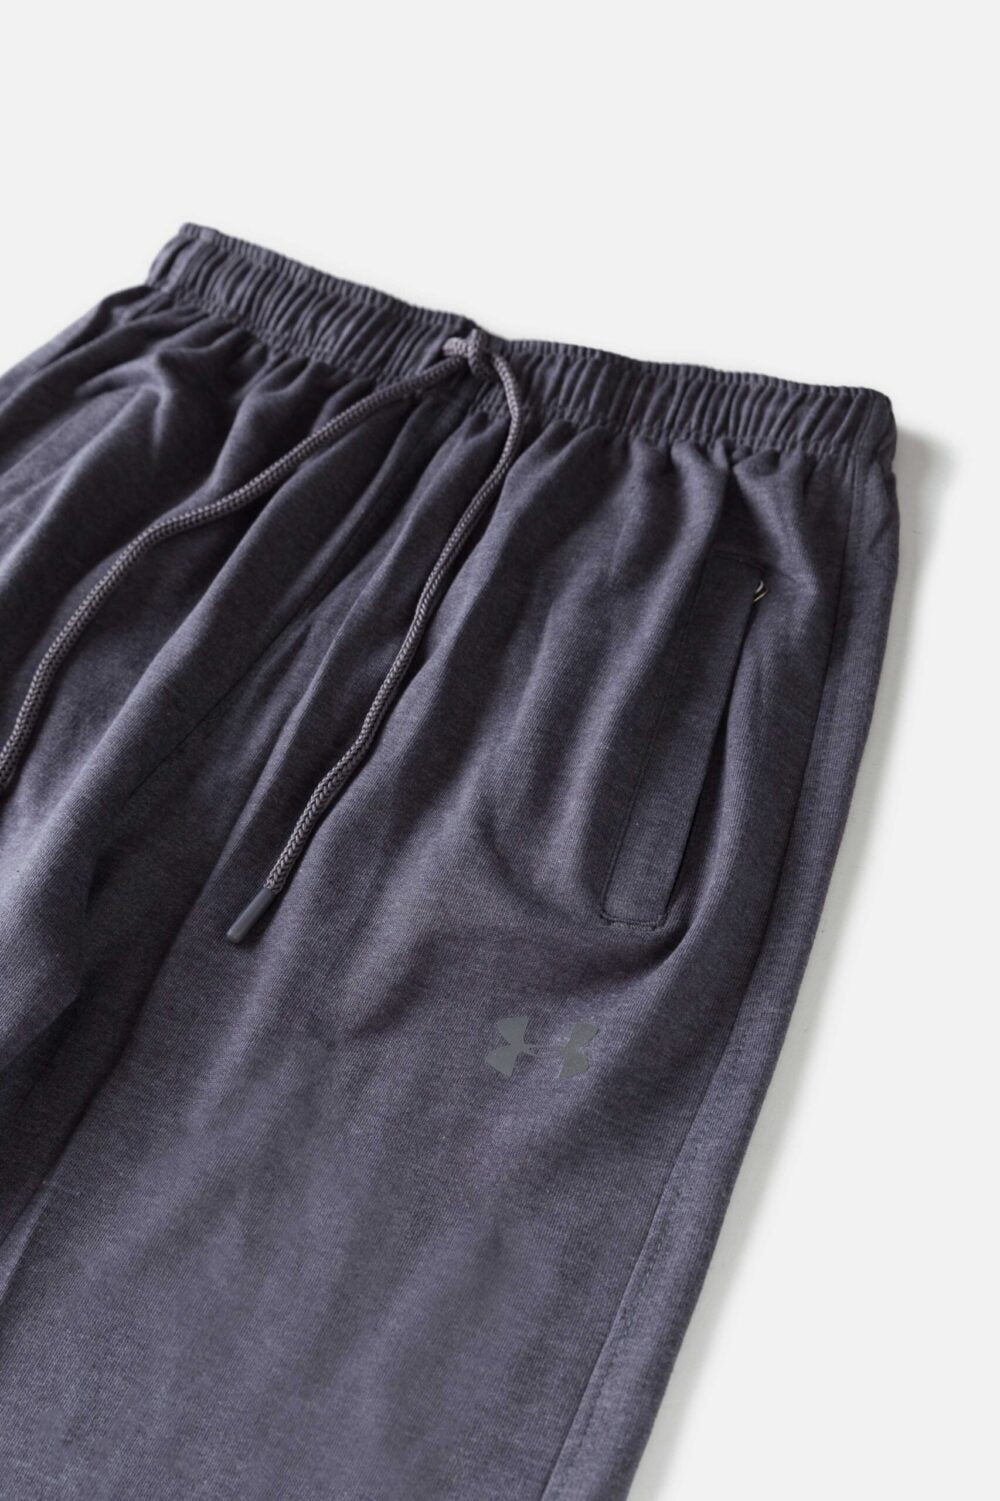 UA Premium Cotton Trouser – Grey